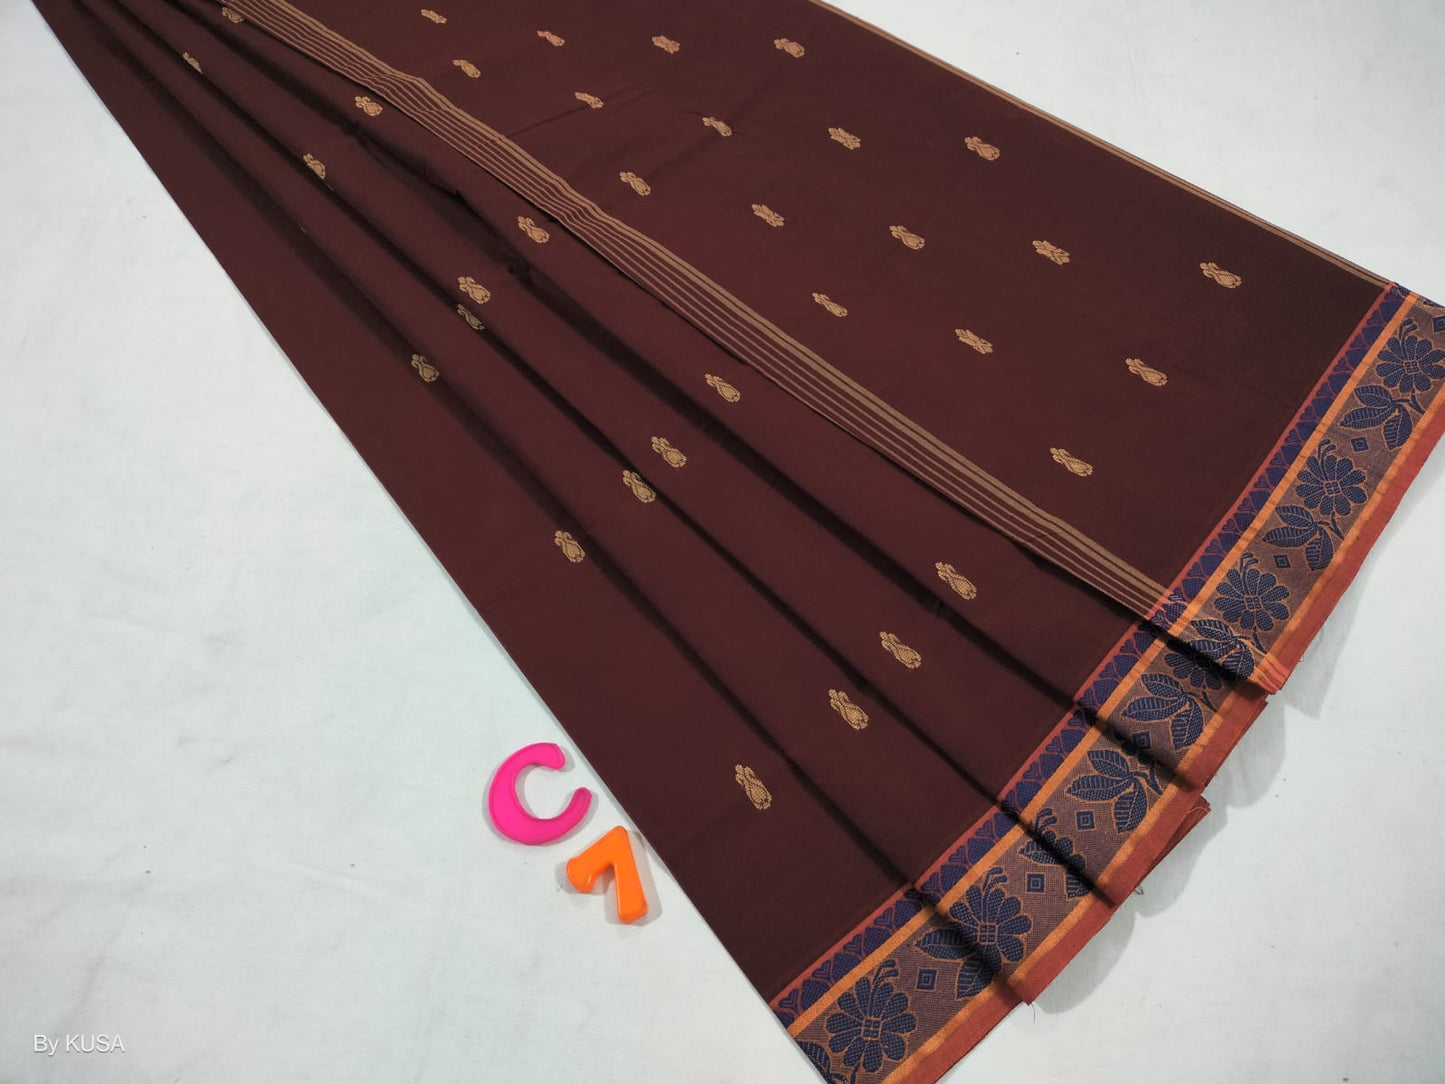 Covai handloom pure soft cotton saree